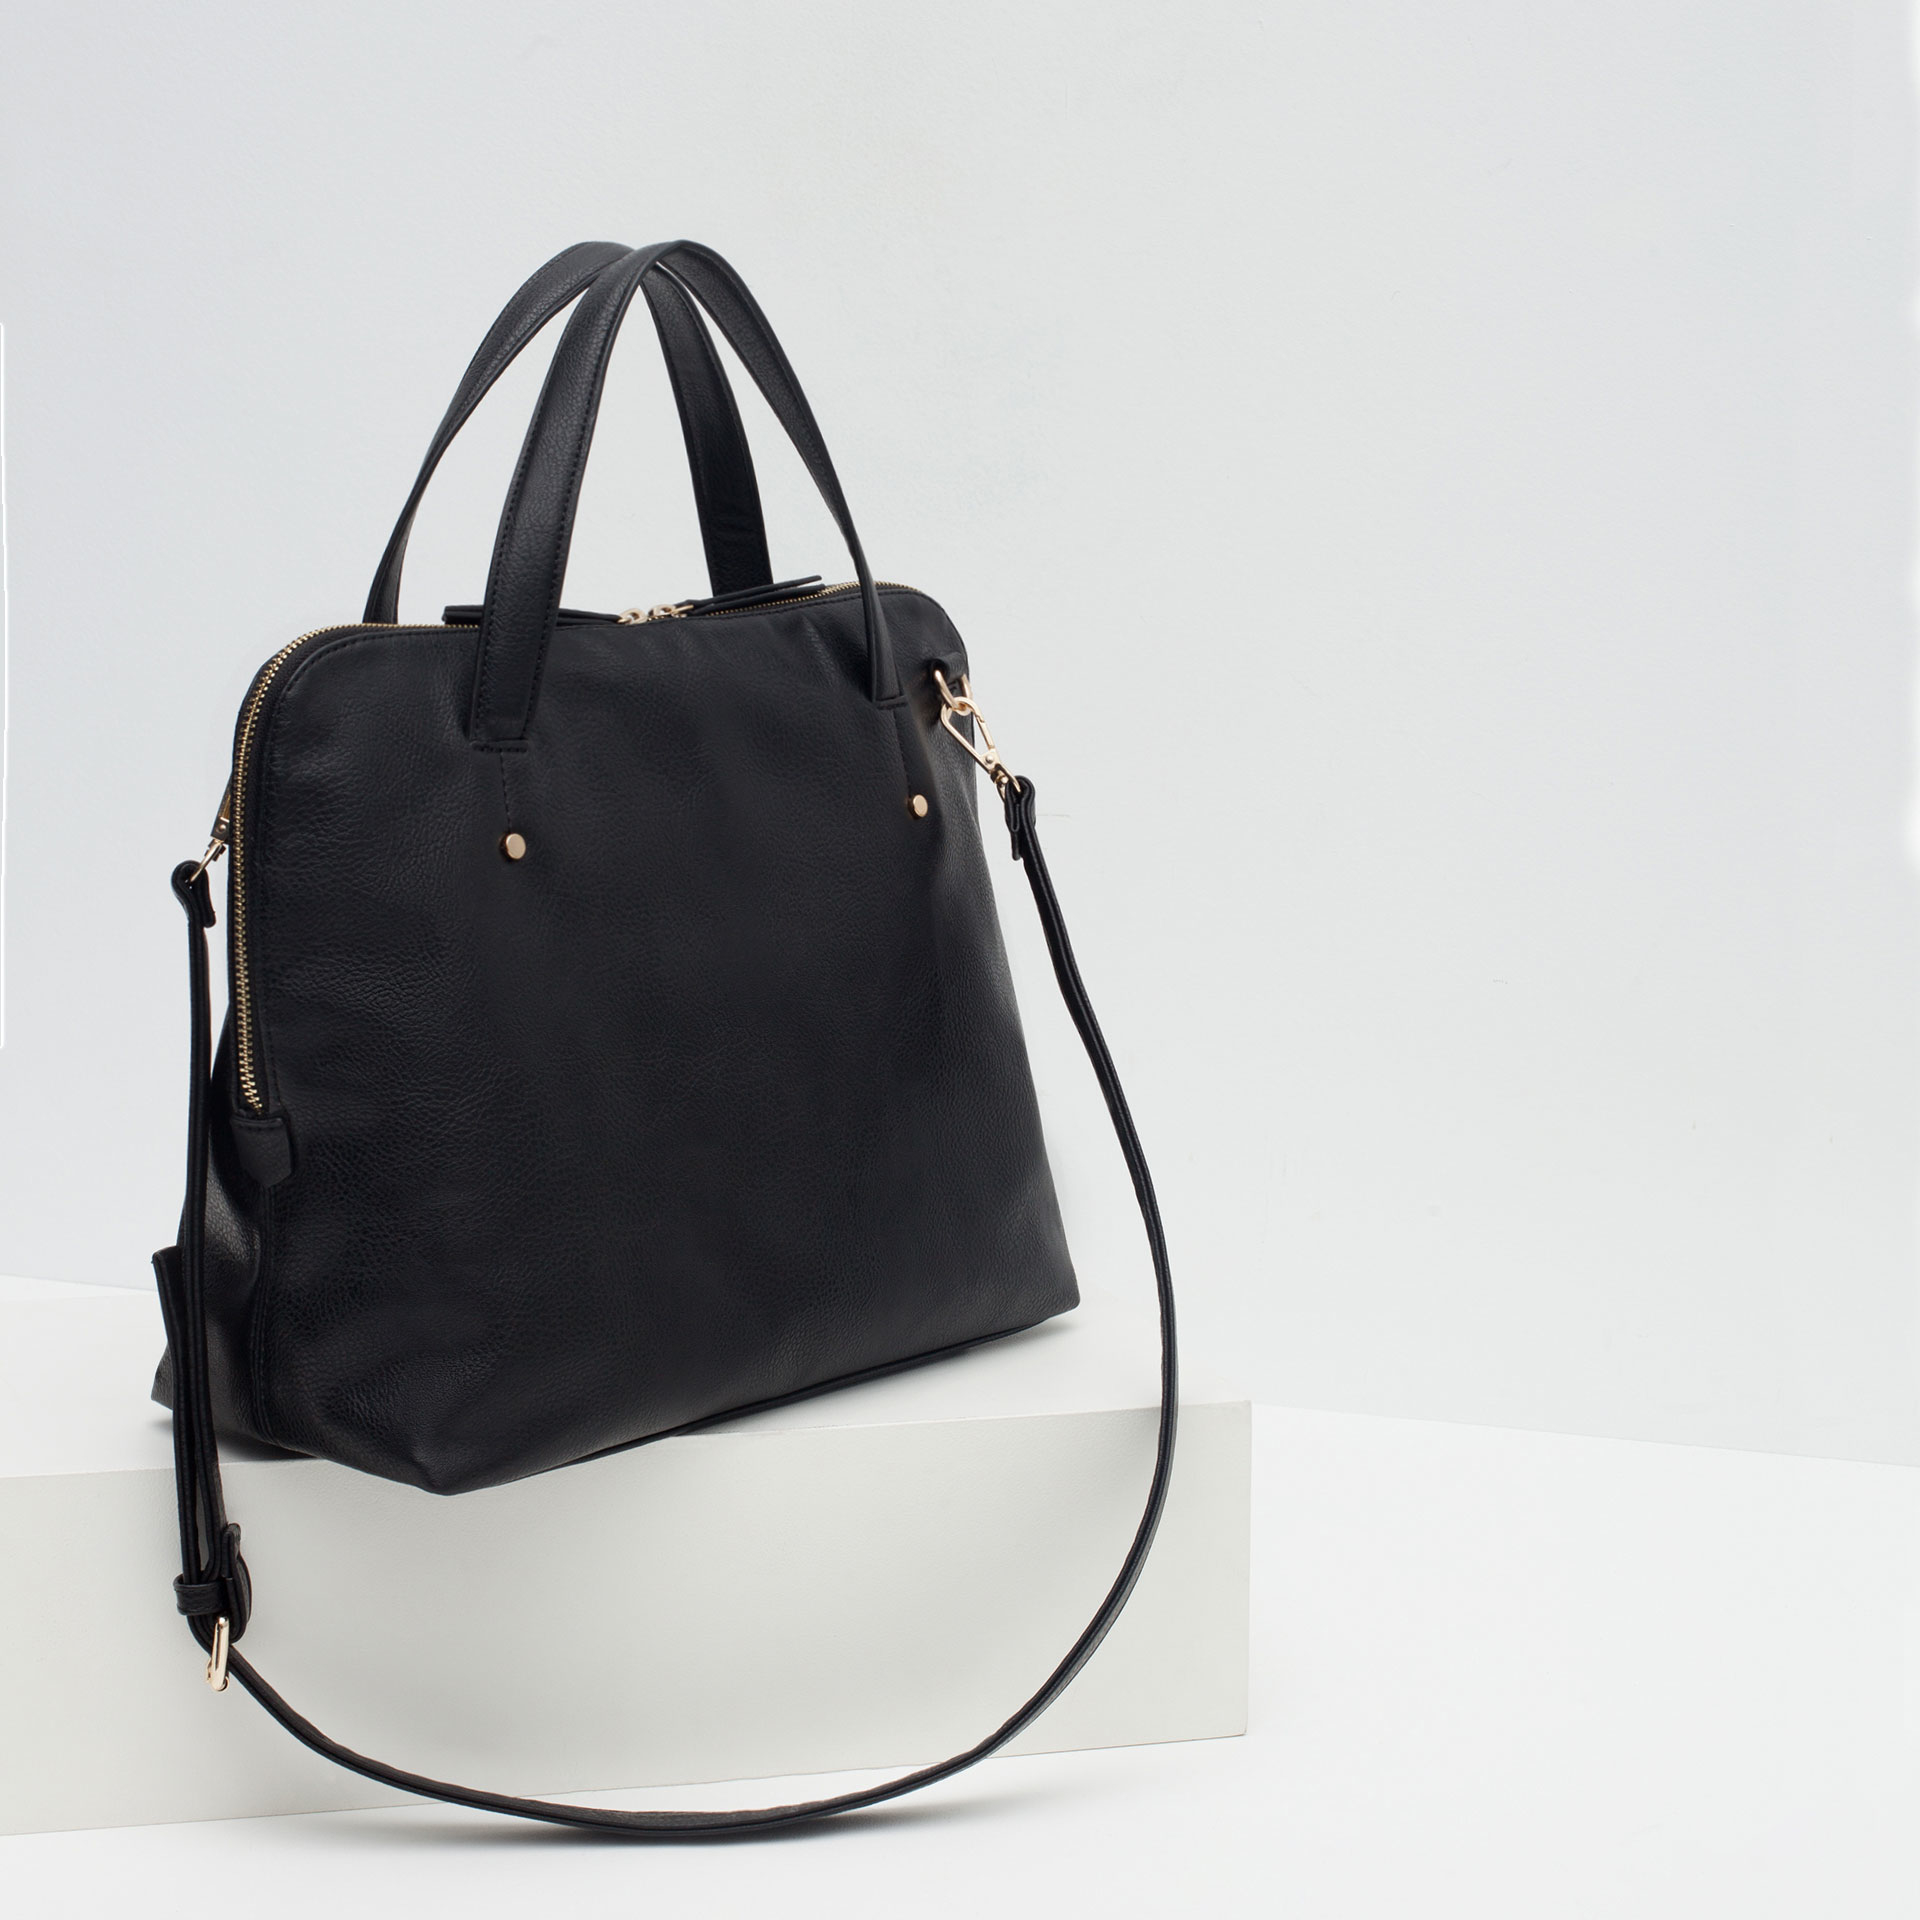 Zara Soft City Bag in Black | Lyst